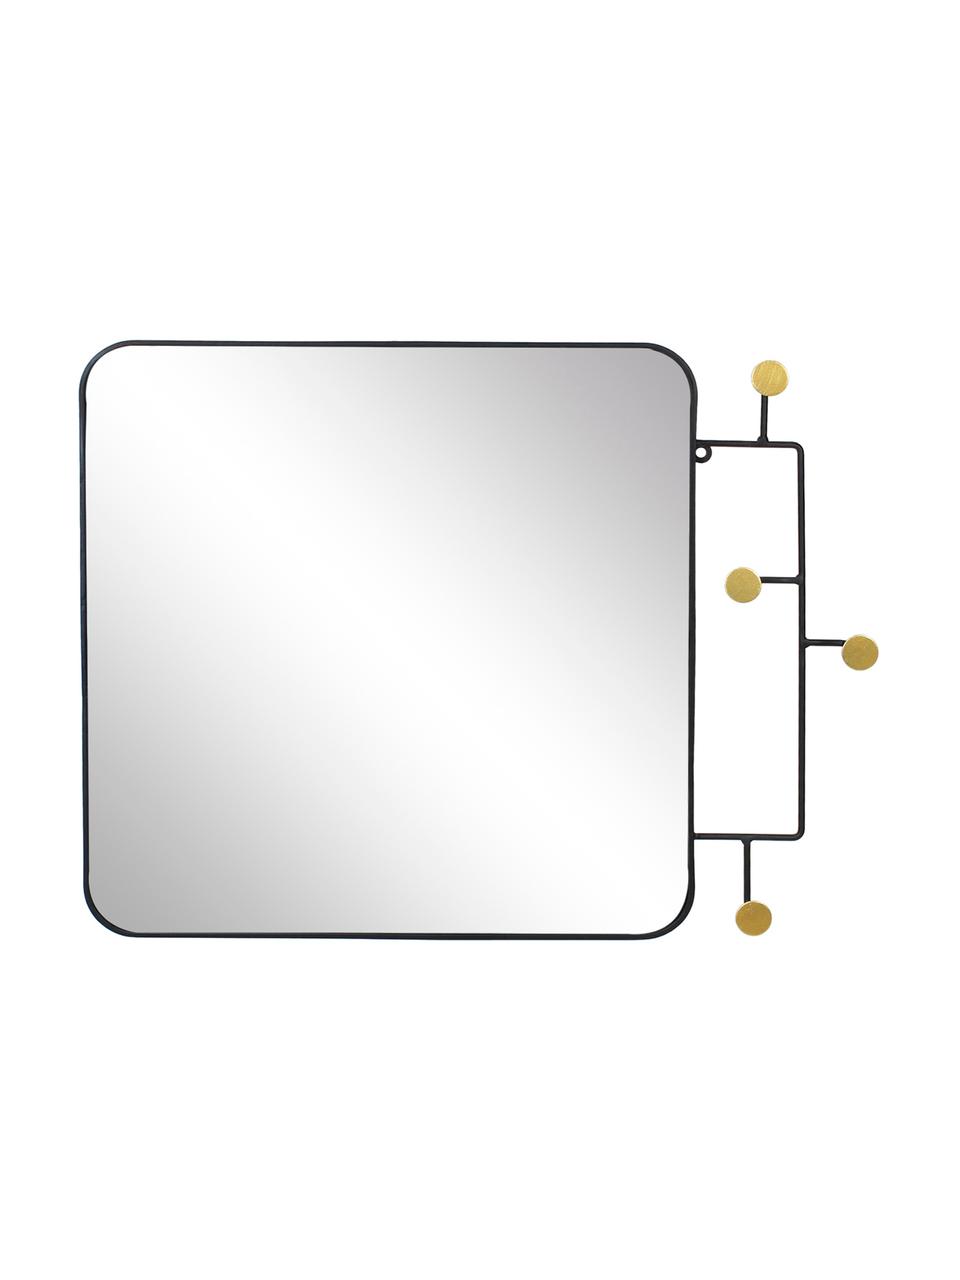 Espejo de pared Korbit, Negro, dorado, An 66 x Al 51 cm